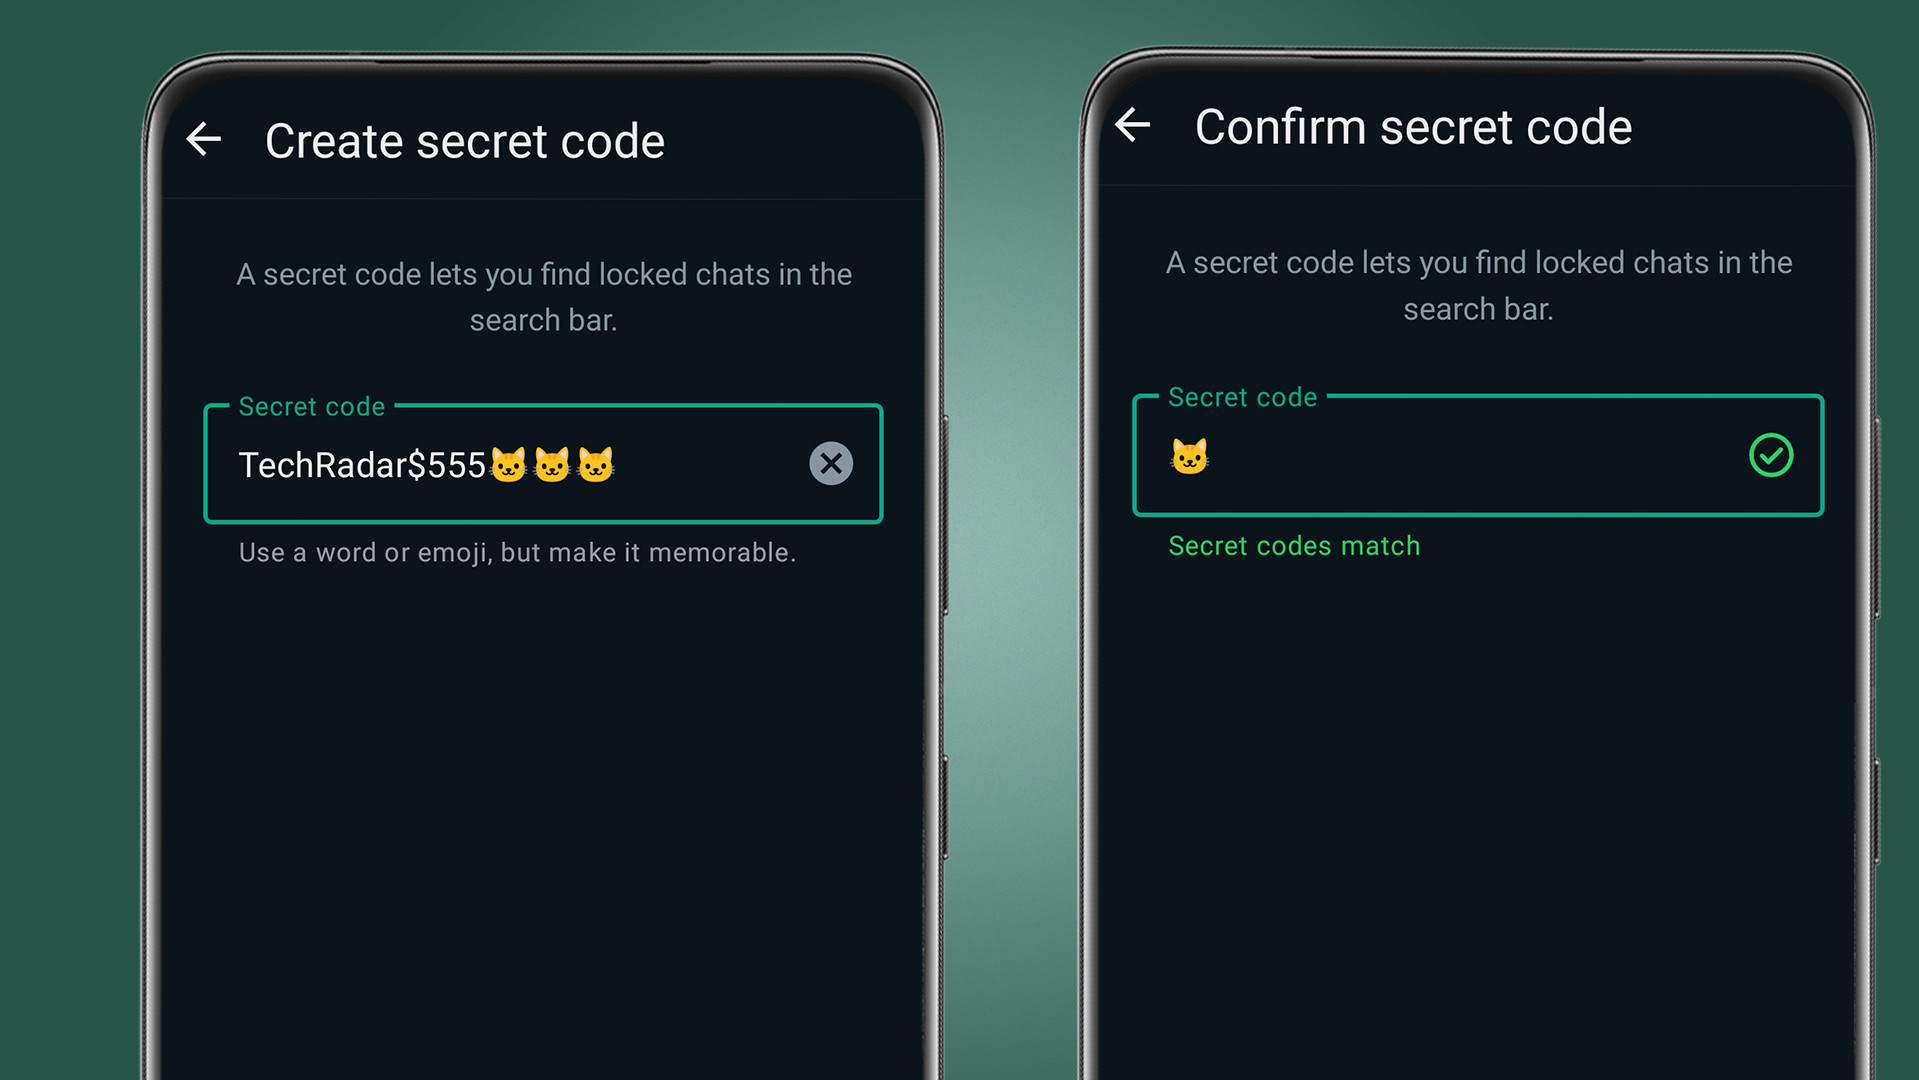 Examples of WhatsApp secret code